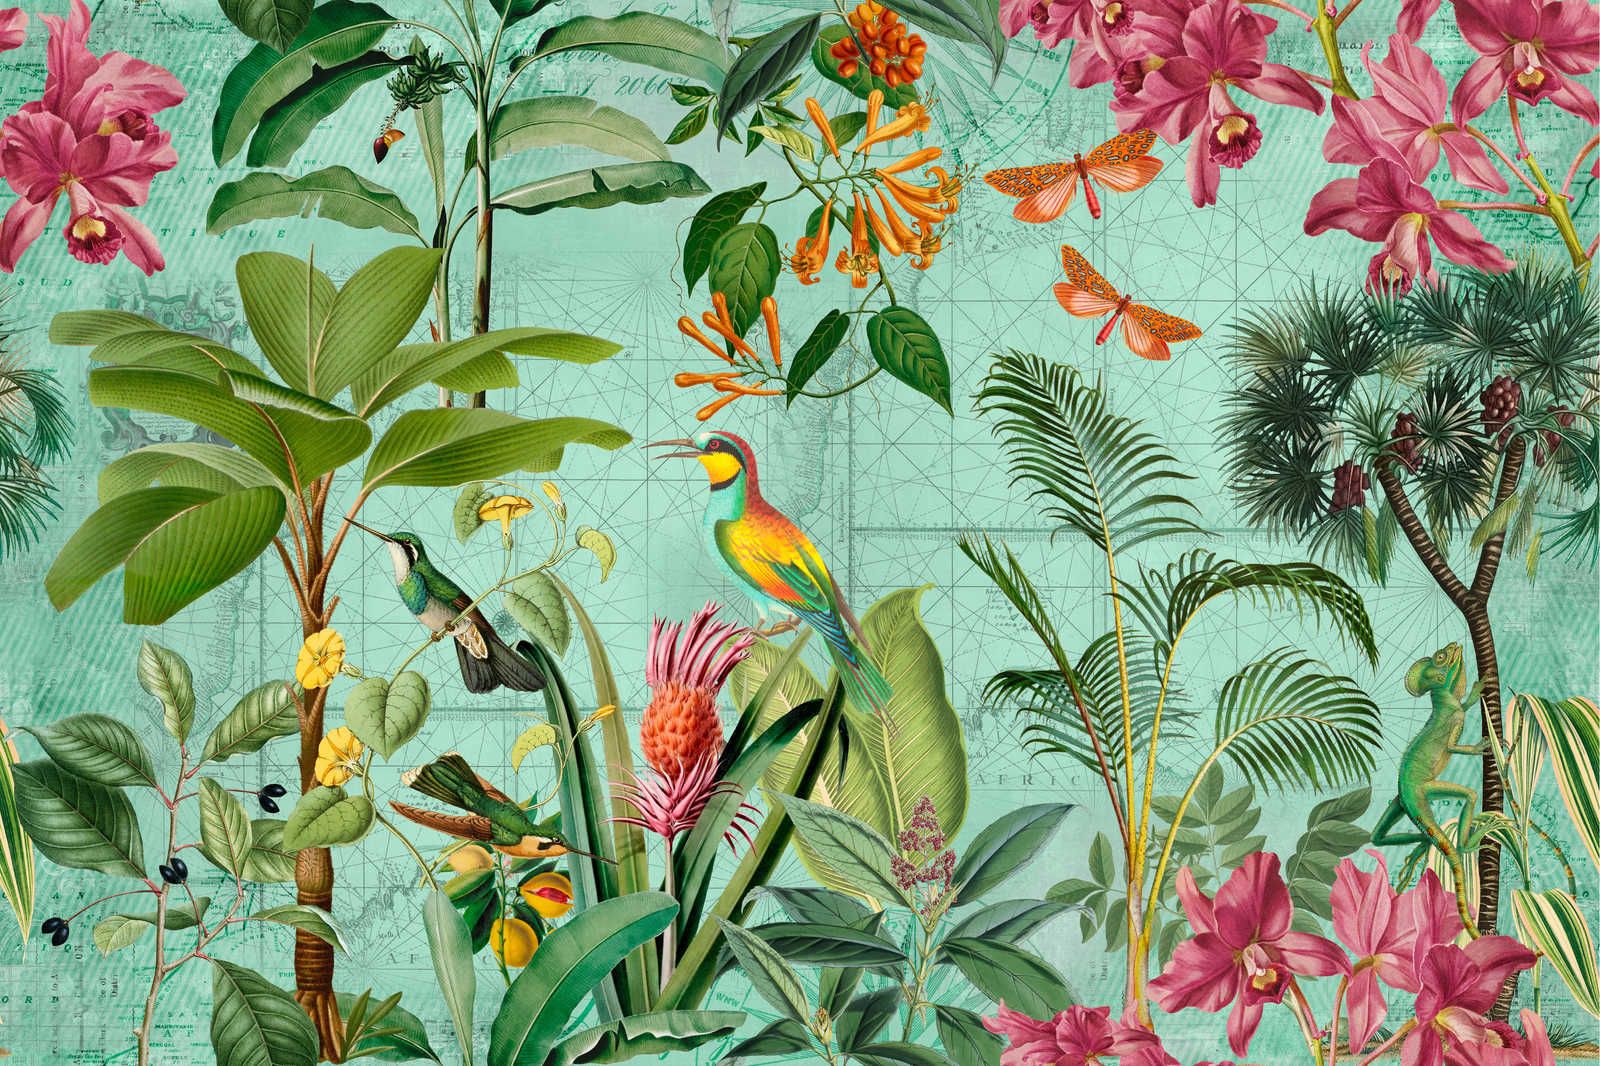             Buntes Dschungel Leinwandbild mit Bäumen, Blüten & Tieren – 0,90 m x 0,60 m
        